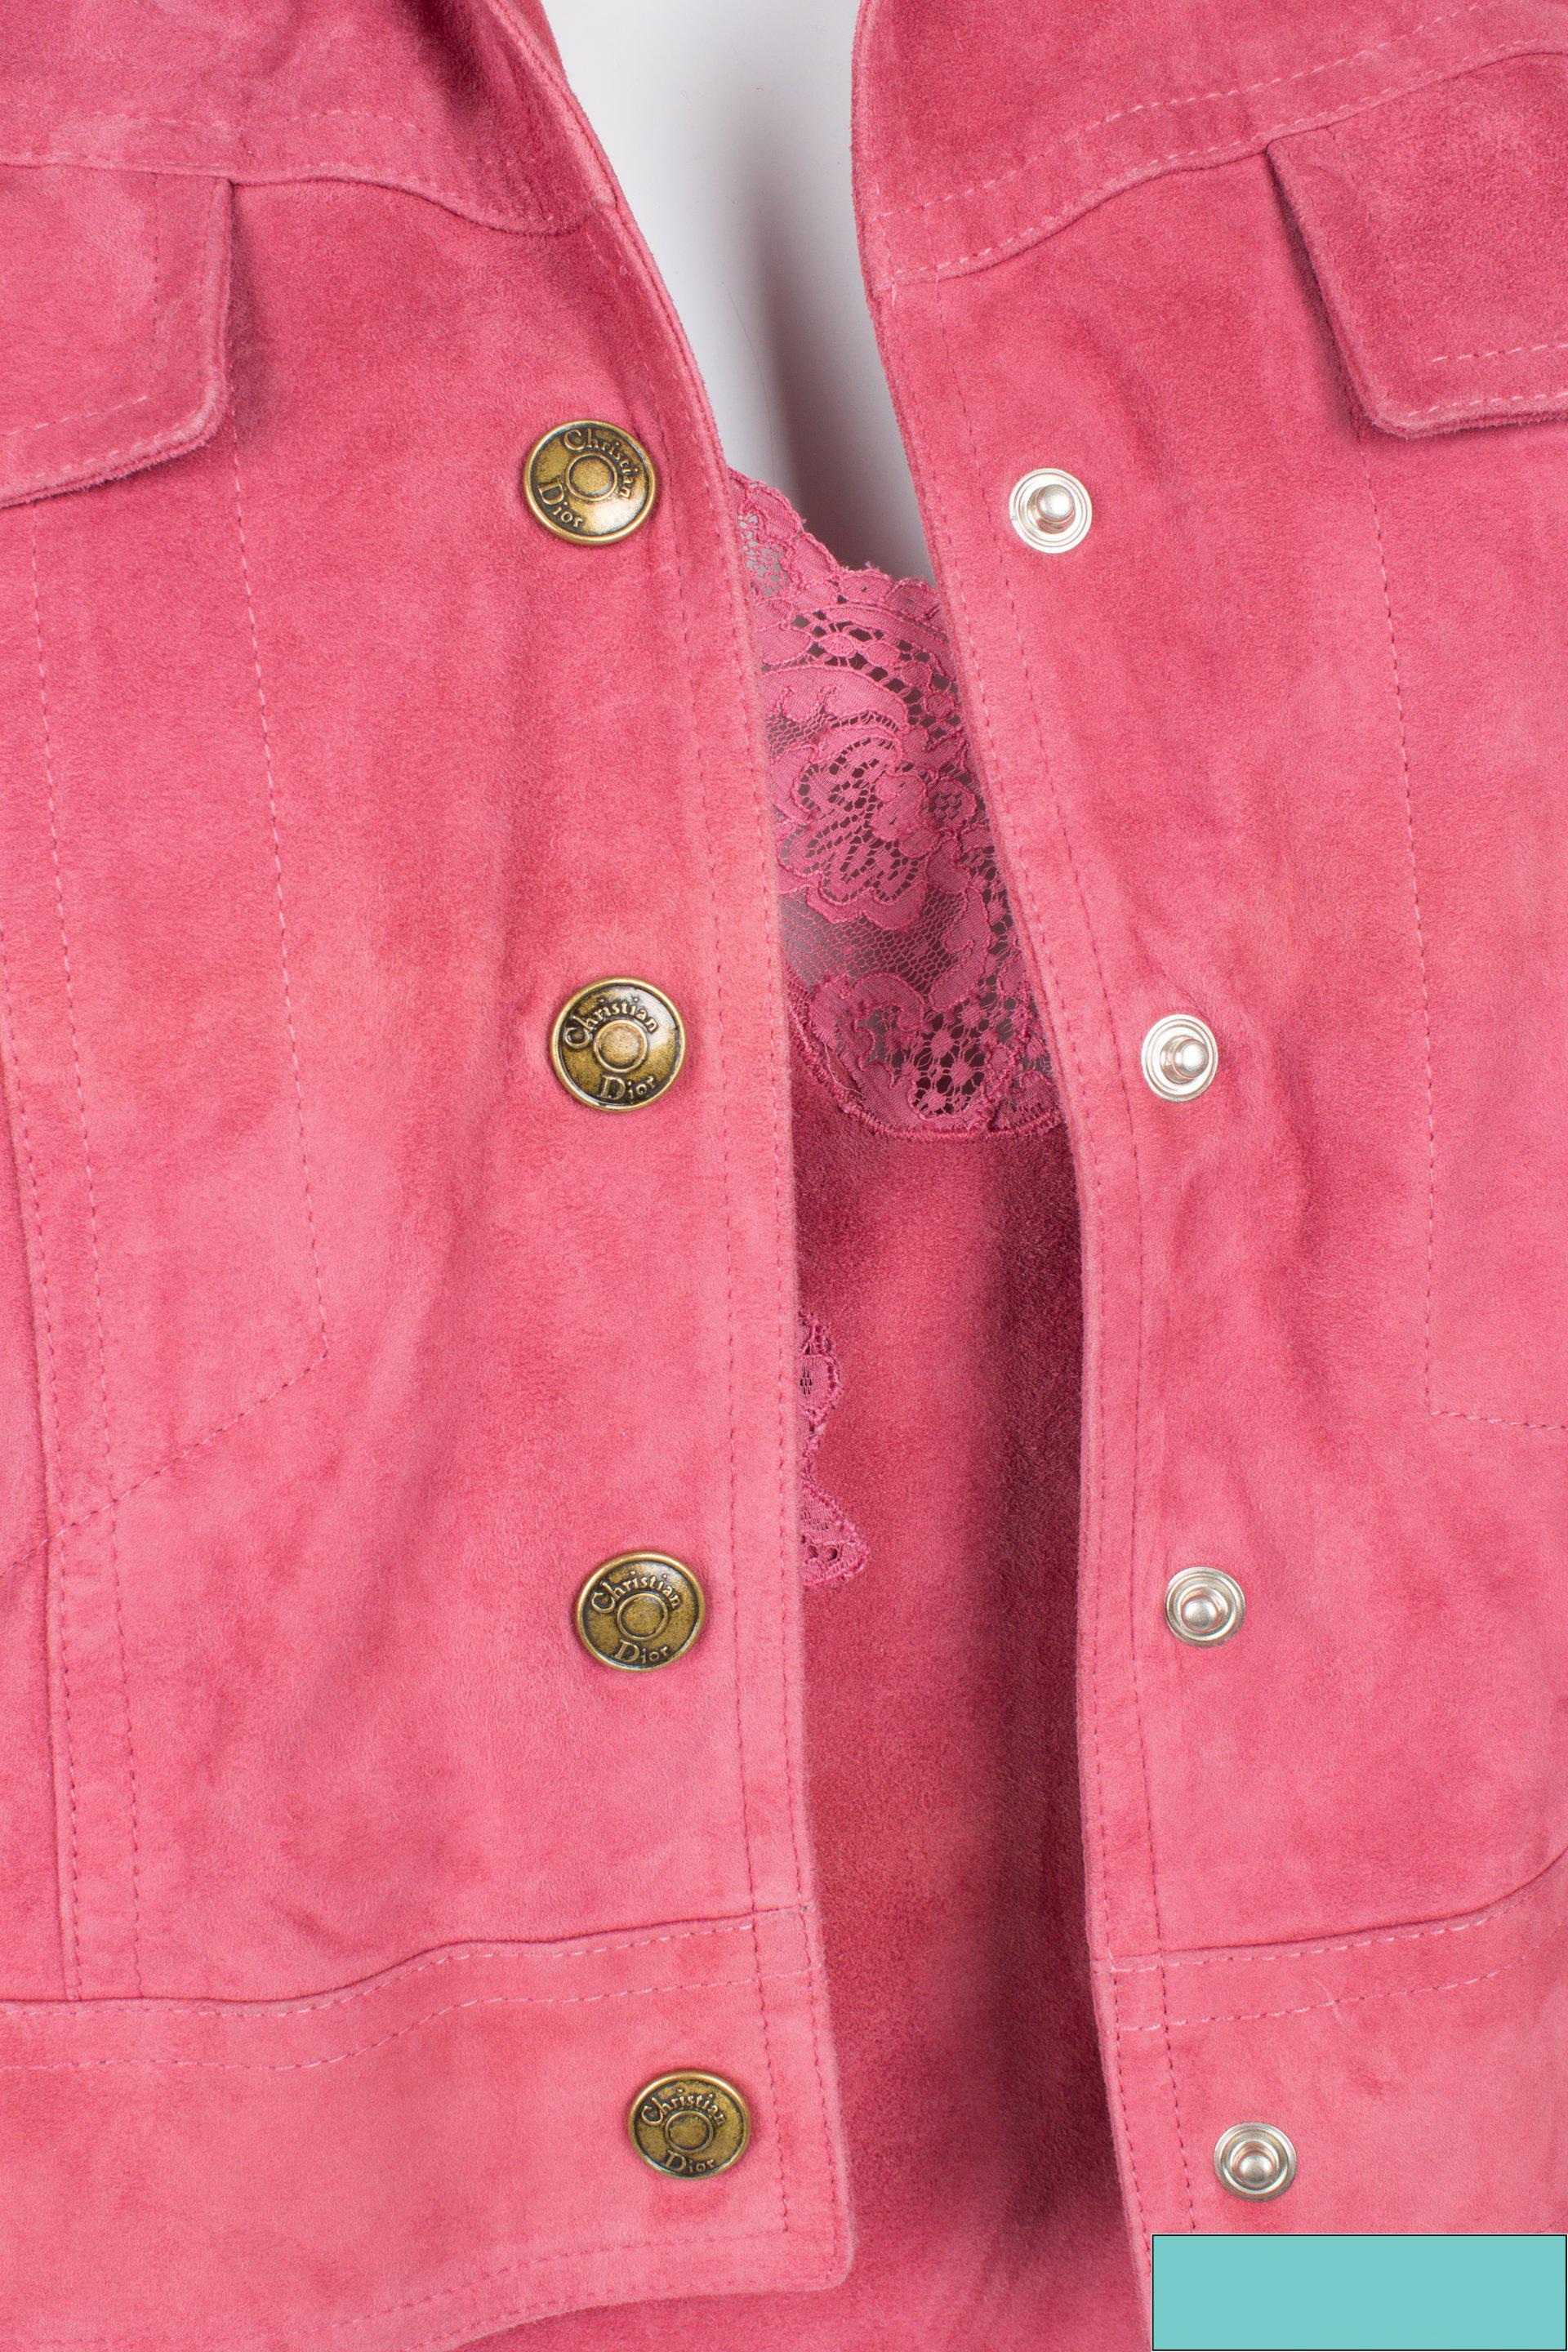 Christian Dior Dress & Jacket - pink suede For Sale 2